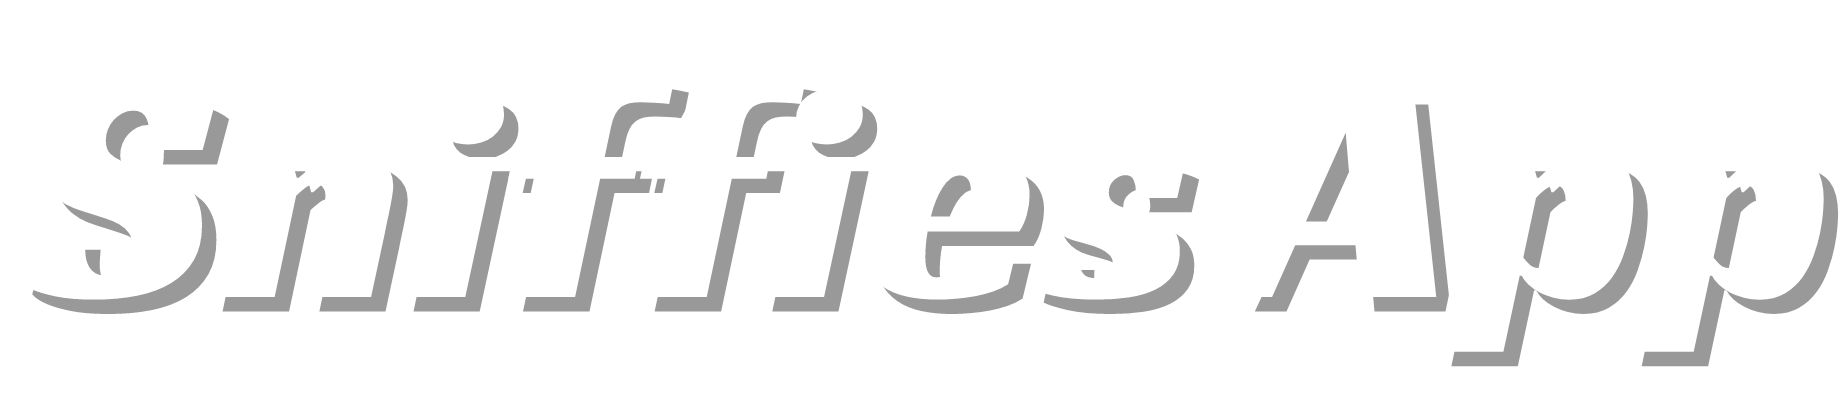 sniffies app logo